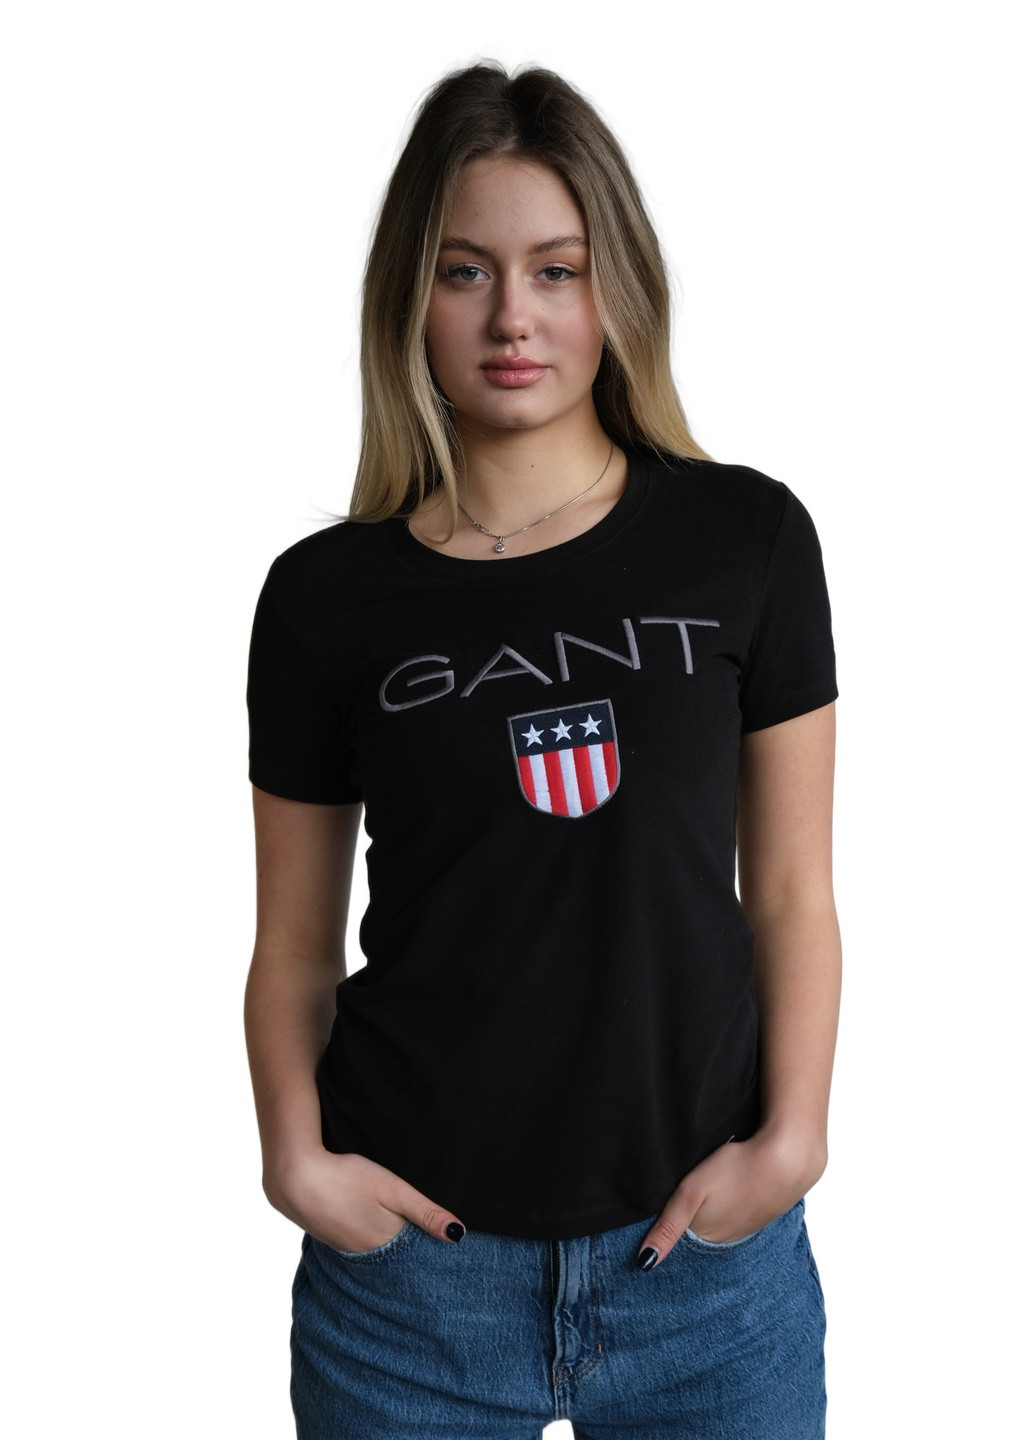 Чорна літня футболка жіноча Gant CLASSIC LOGO